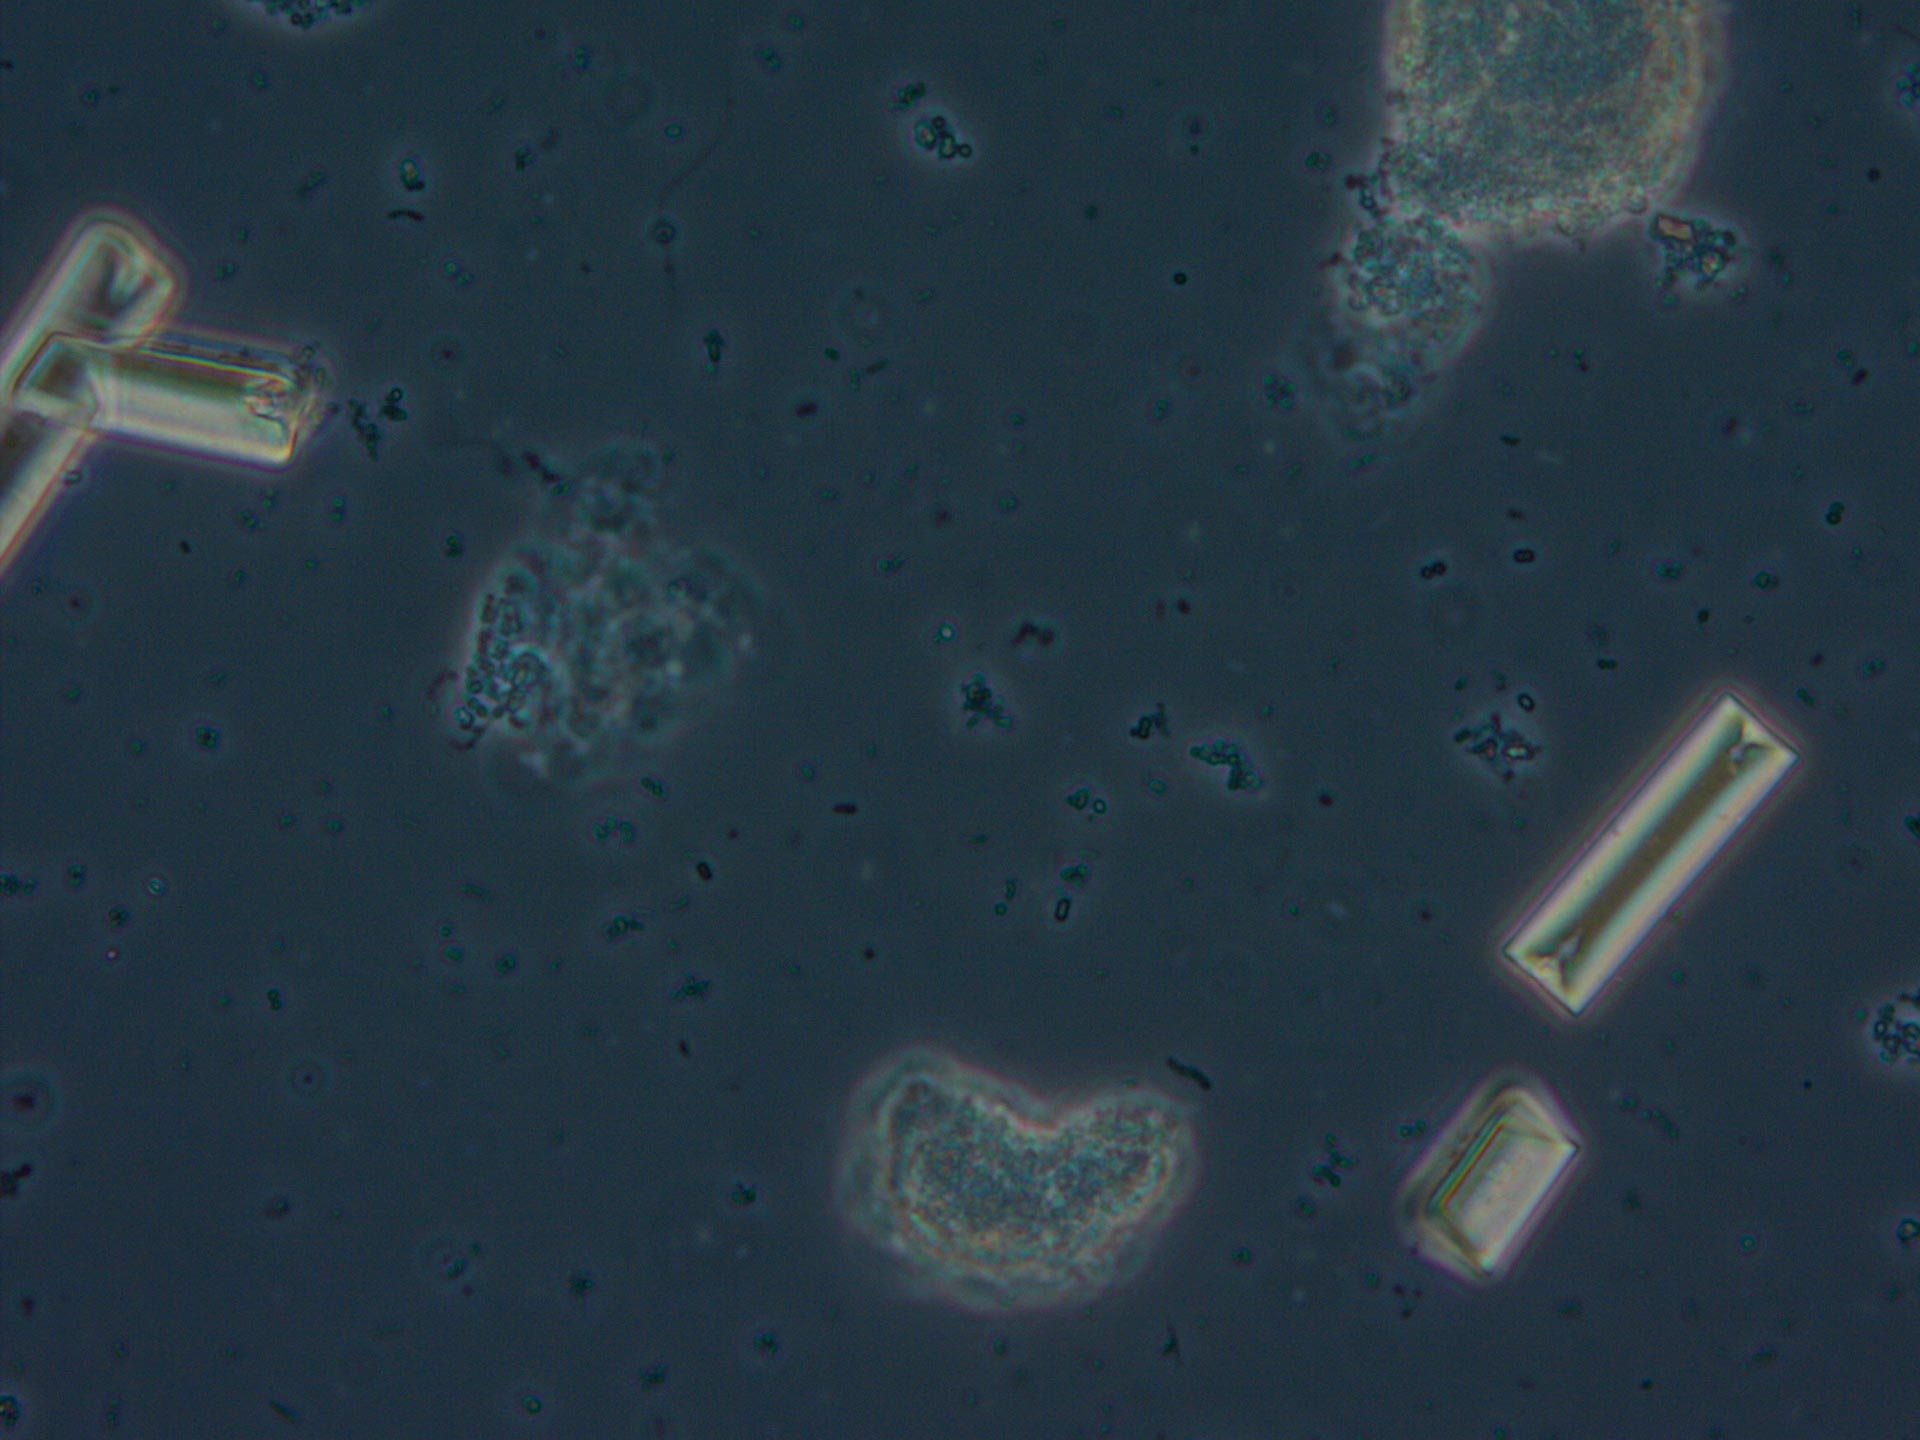 Phase contrast image of urine sediment